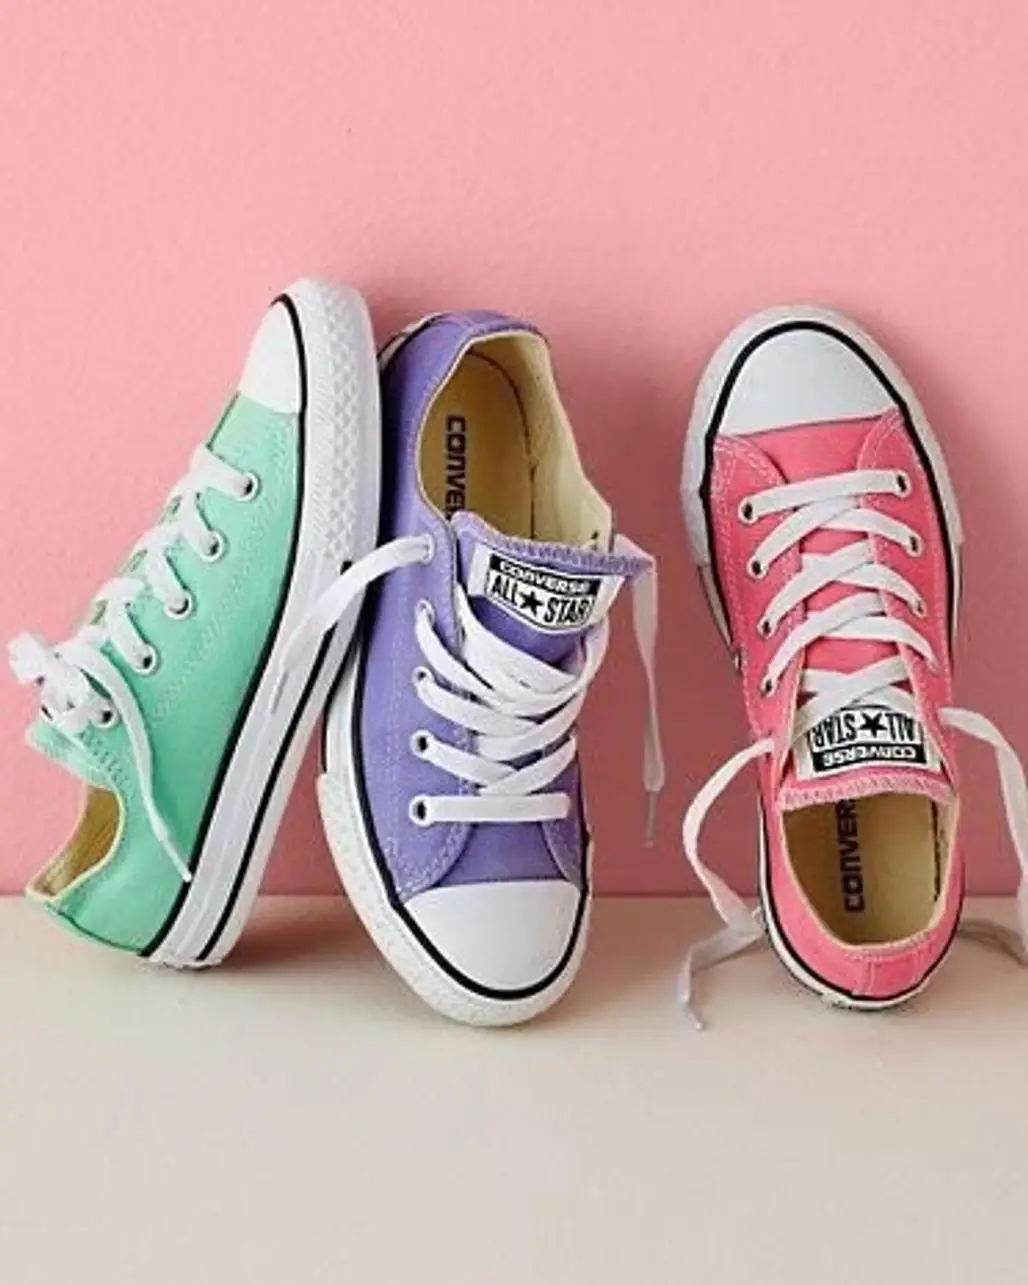 footwear,shoe,white,pink,sneakers,